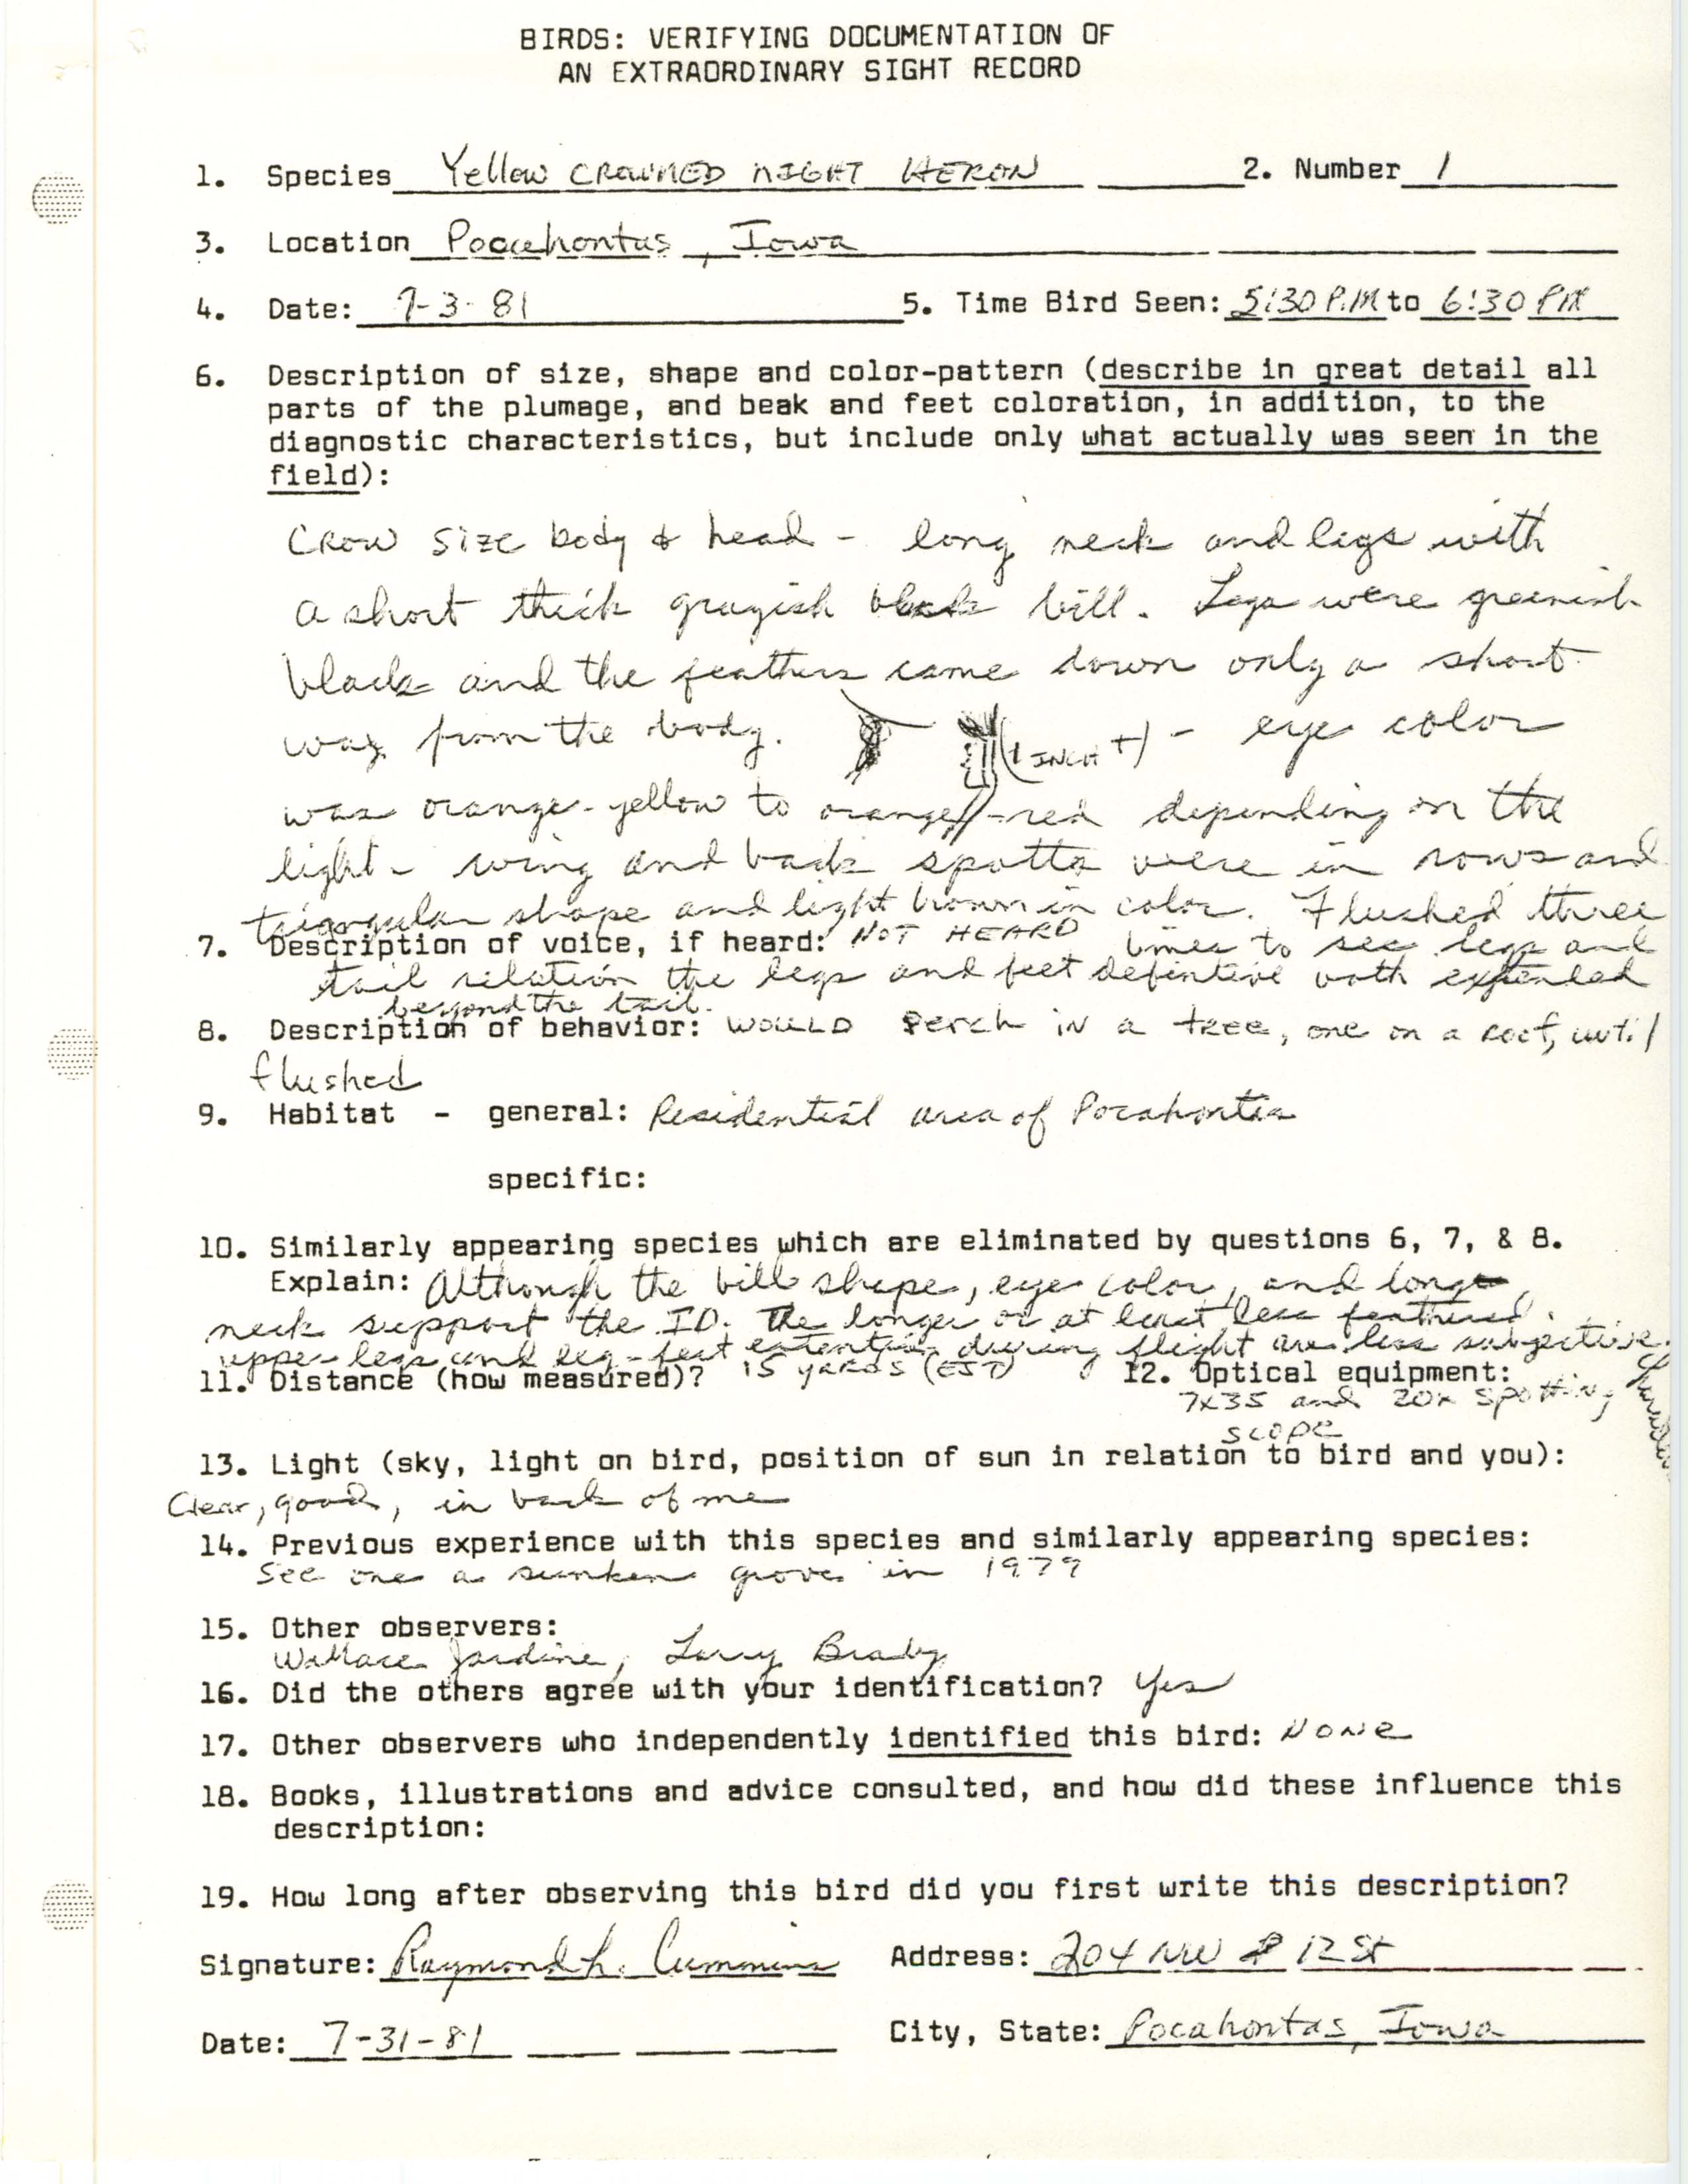 Rare bird documentation form for Yellow-crowned Night Heron at Pocahontas, 1981